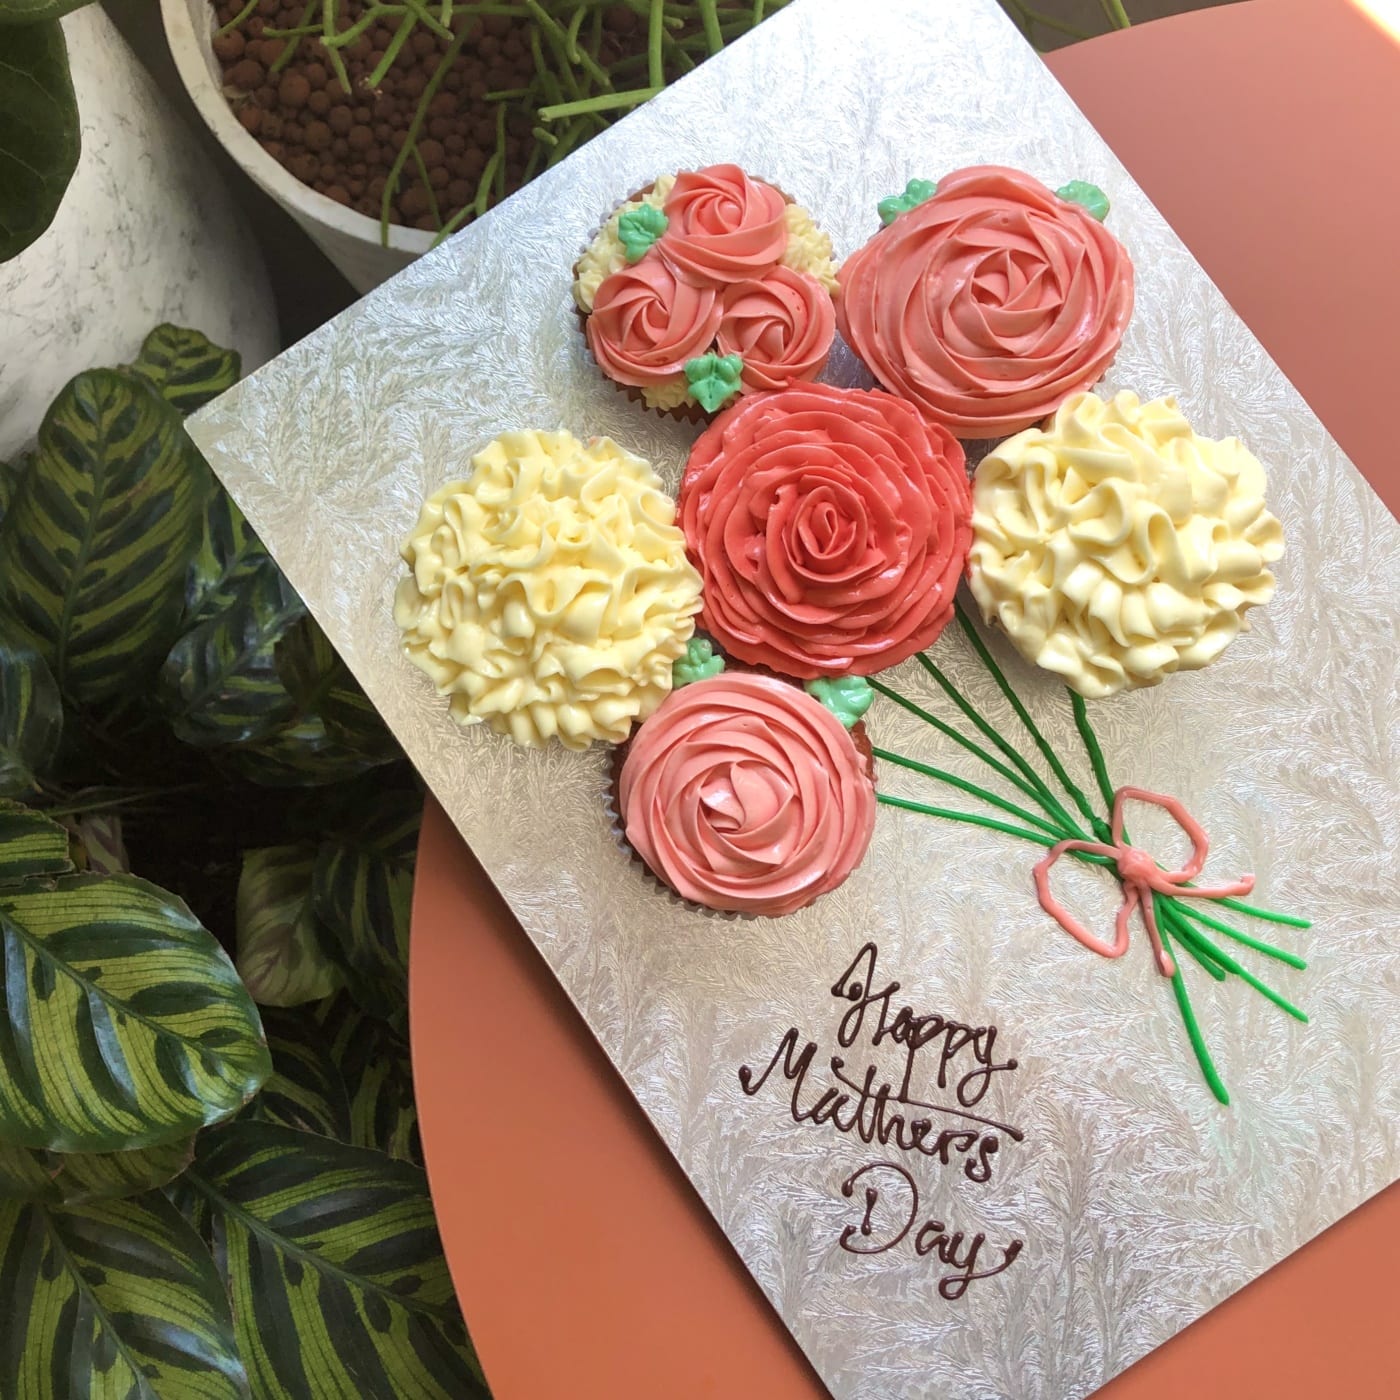 SPRMRKT-Mothers-Day-Cupcake-Bouquet_1-1400x1400